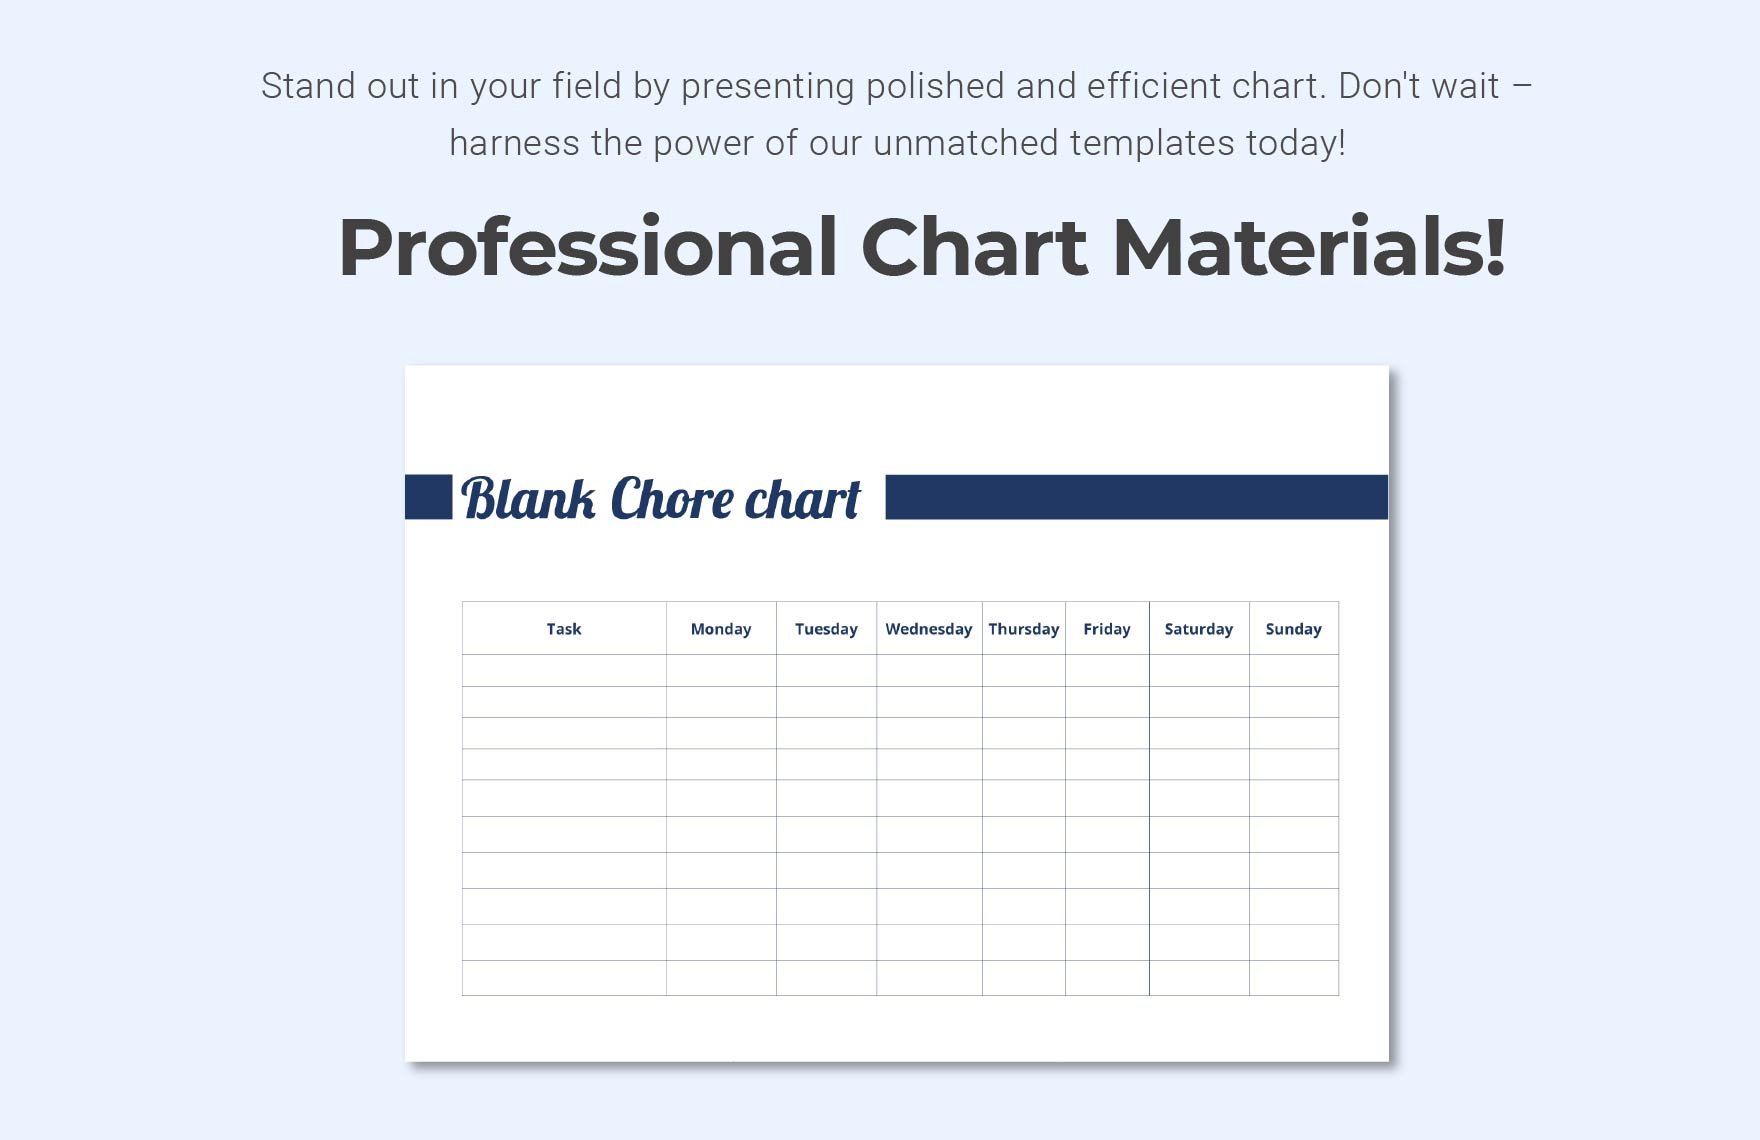 Blank Chore Chart Template